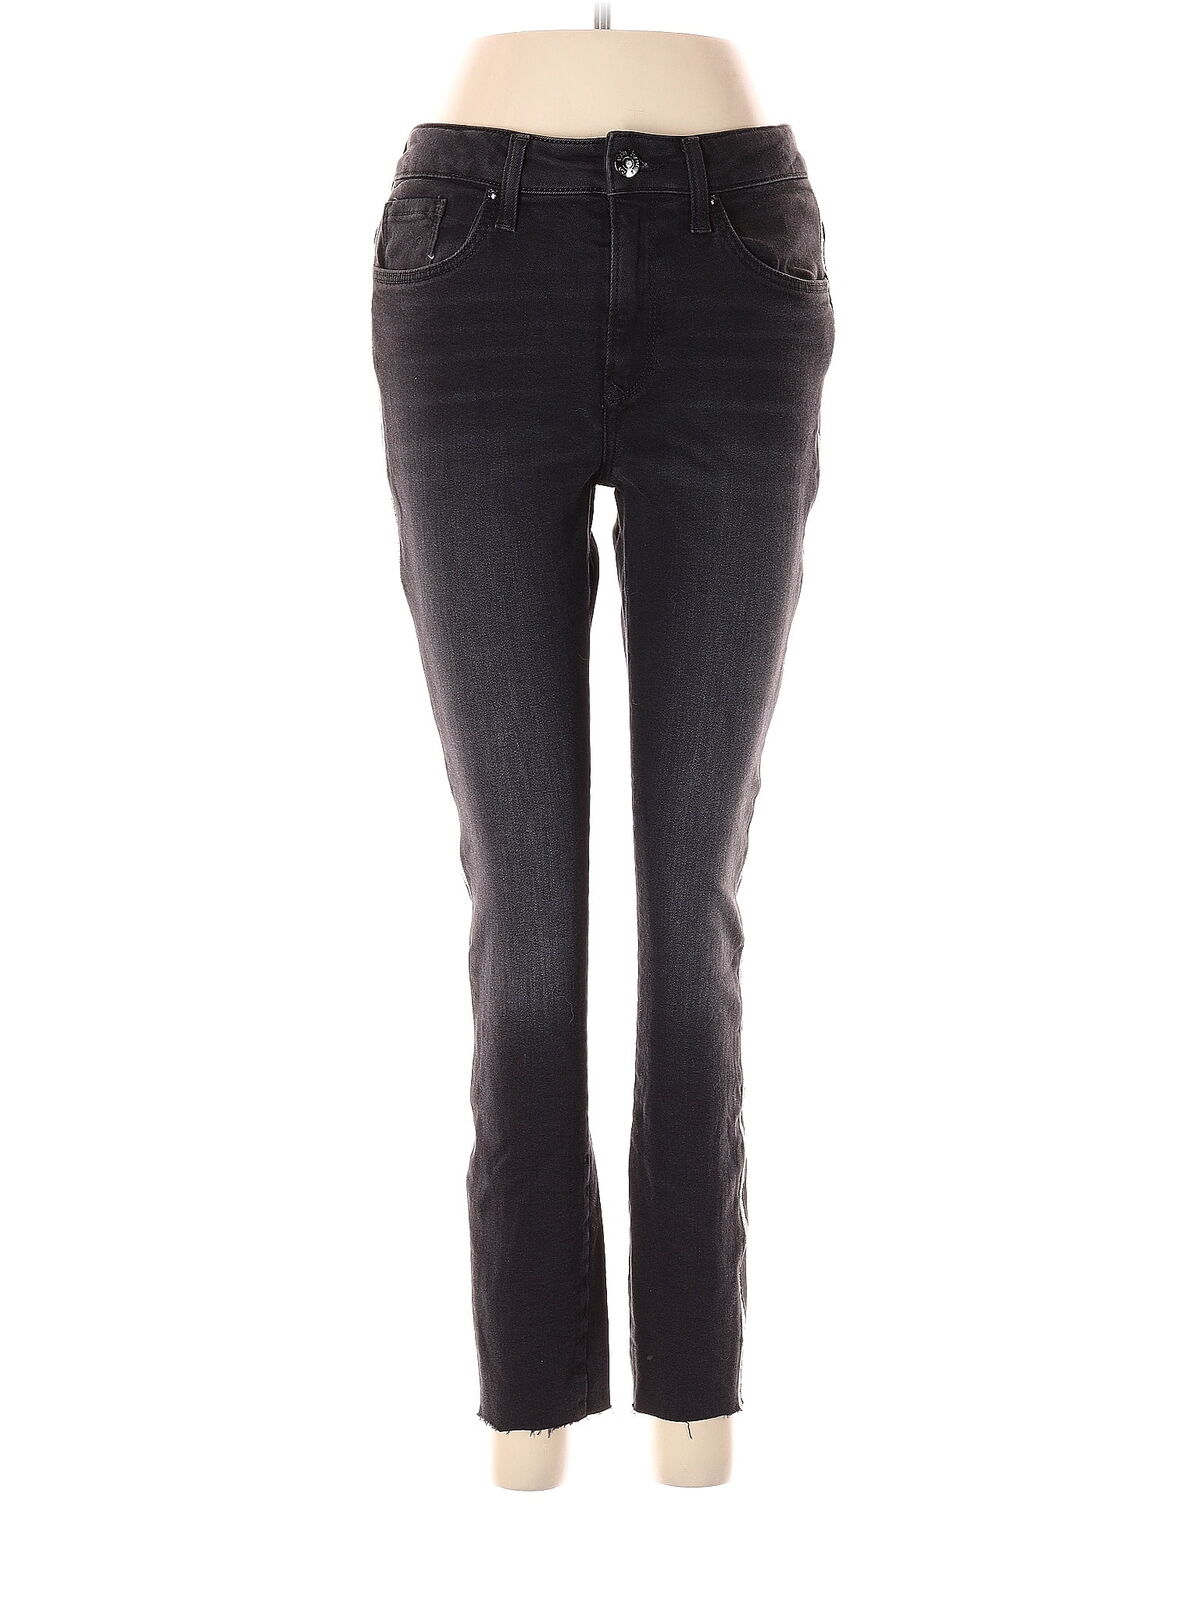 Mavi Women Black Jeans 27W - image 1